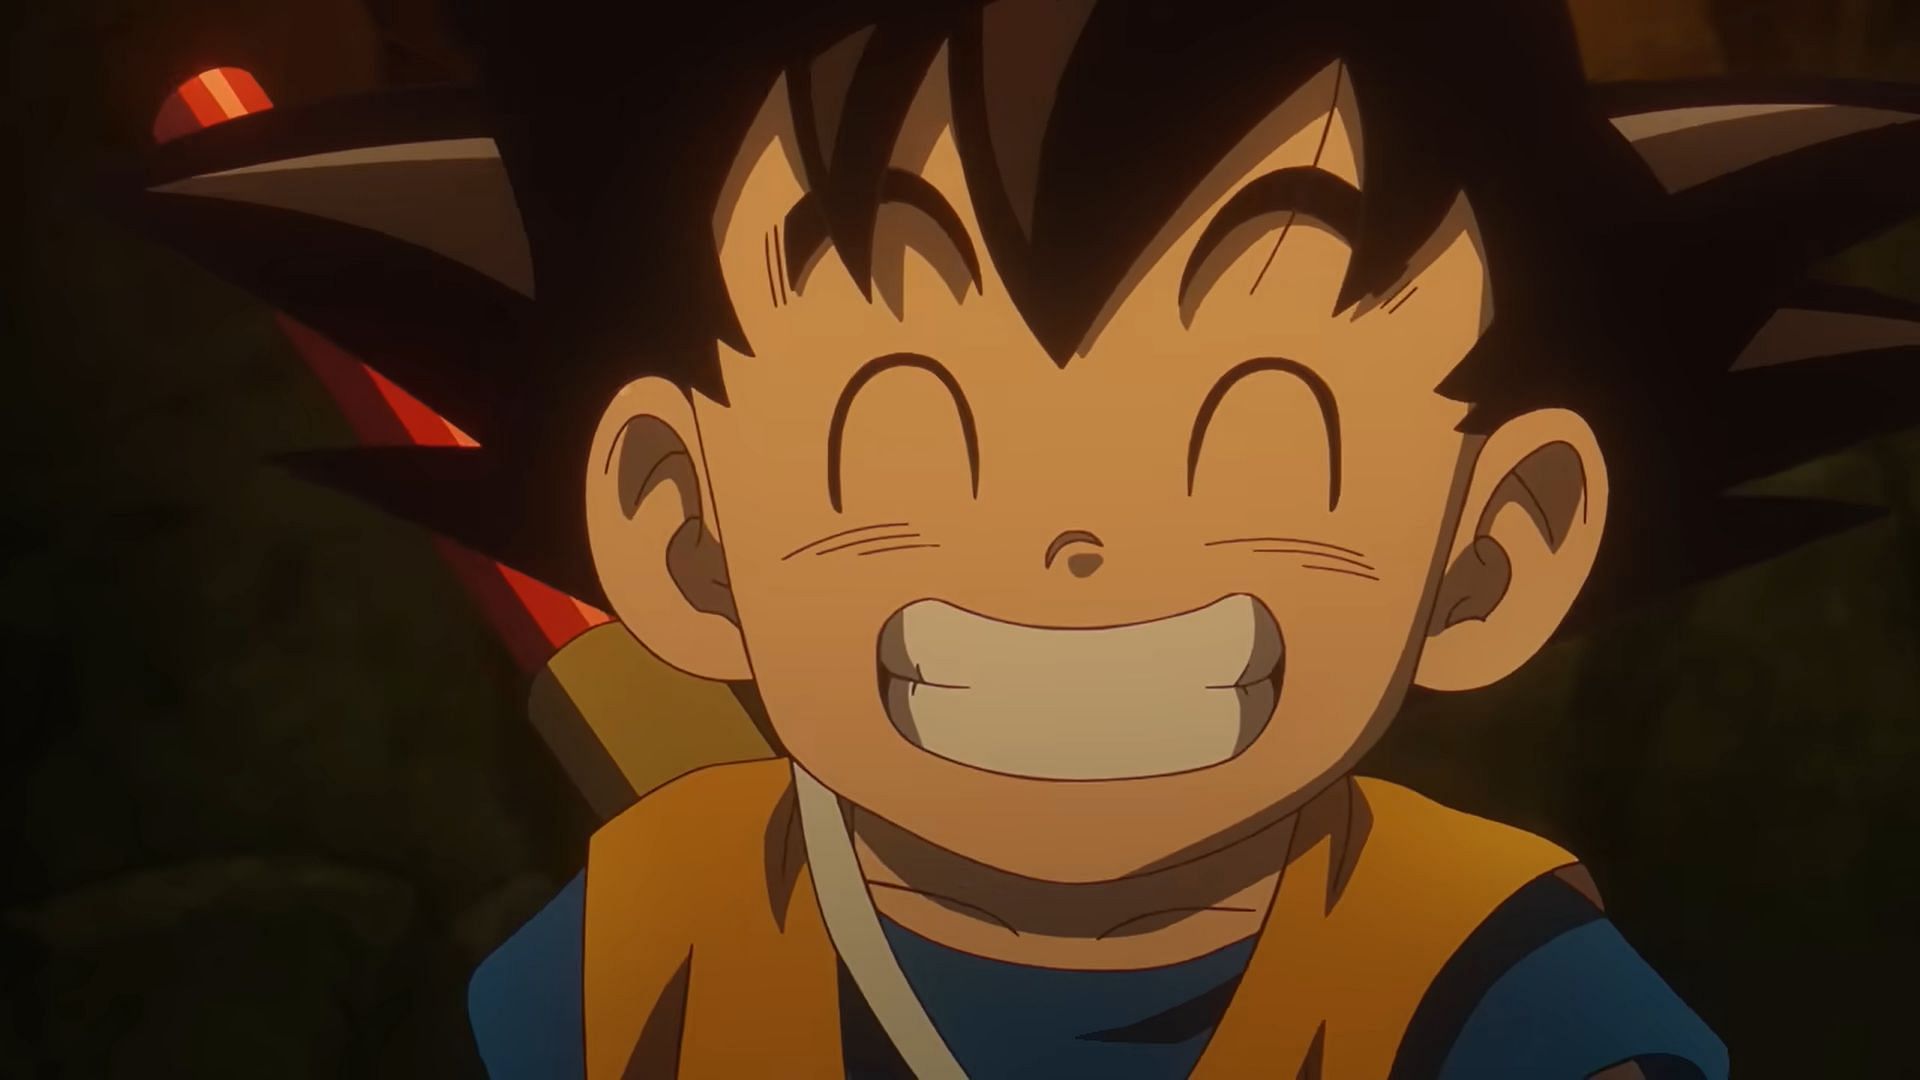 Son Goku as seen in the anime (Image via Toei Animation)